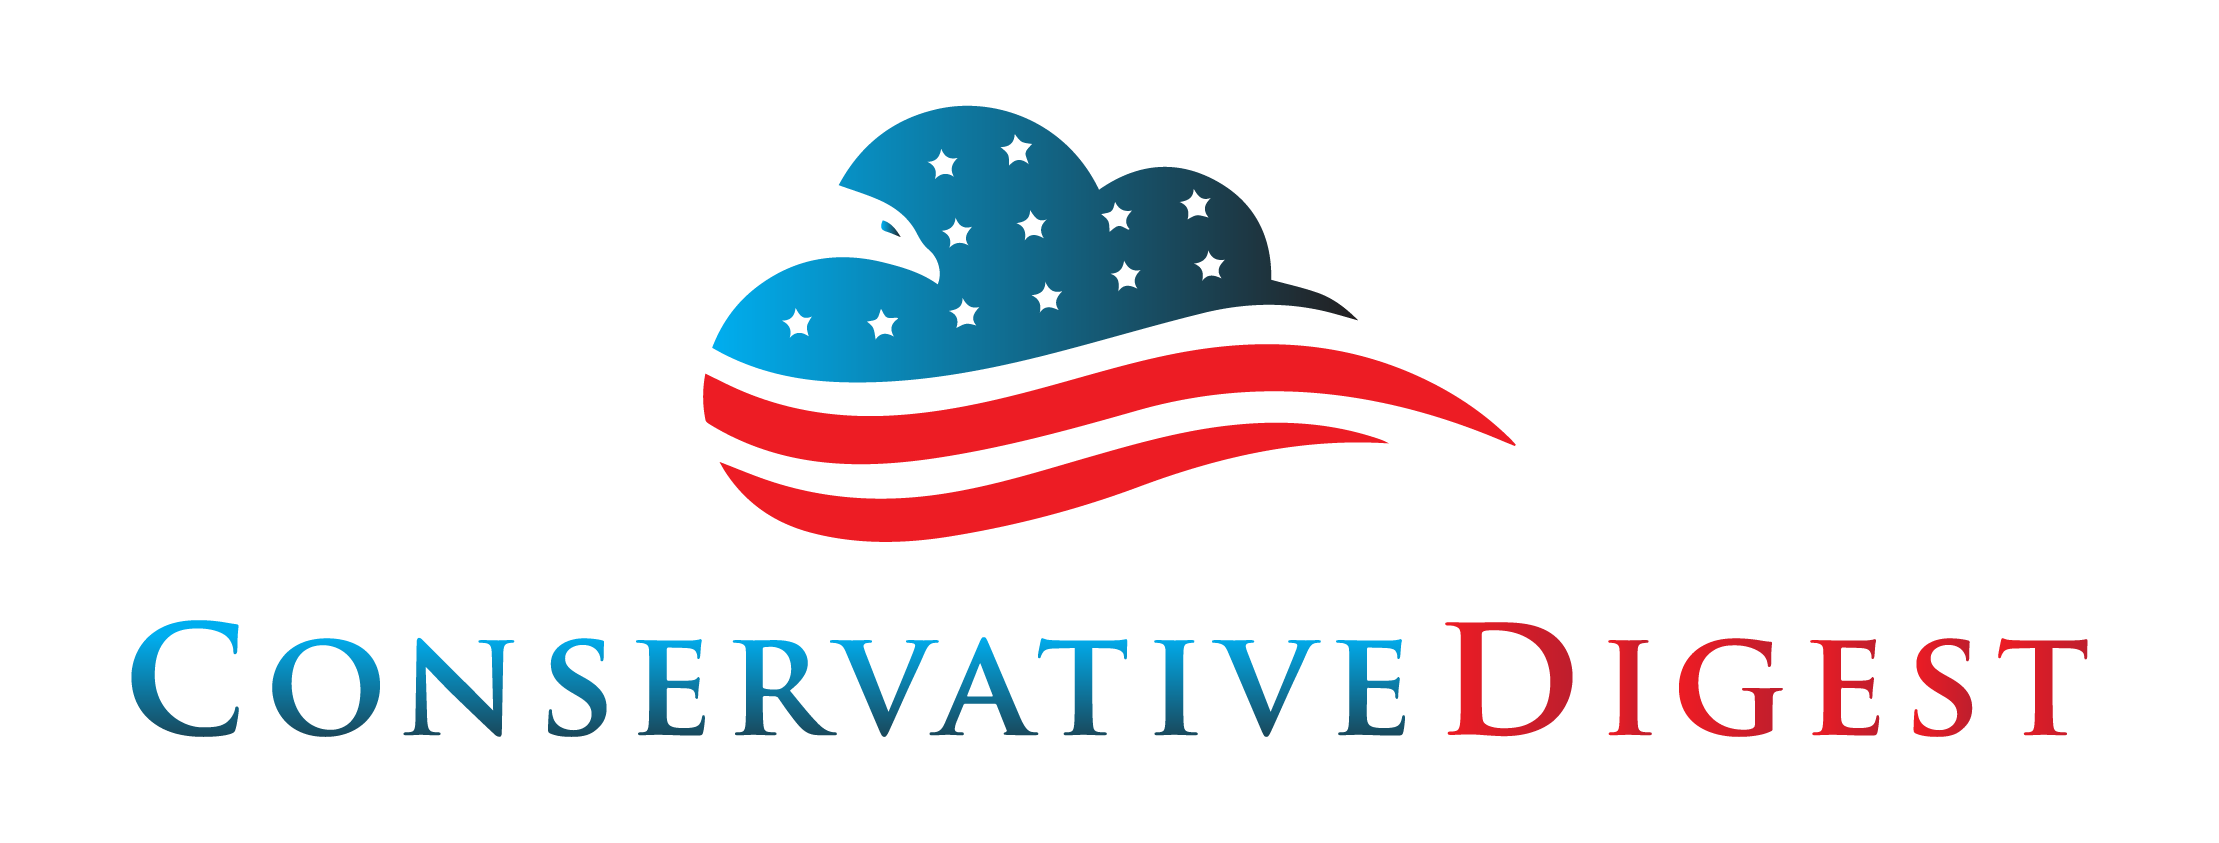 Conservative Digest